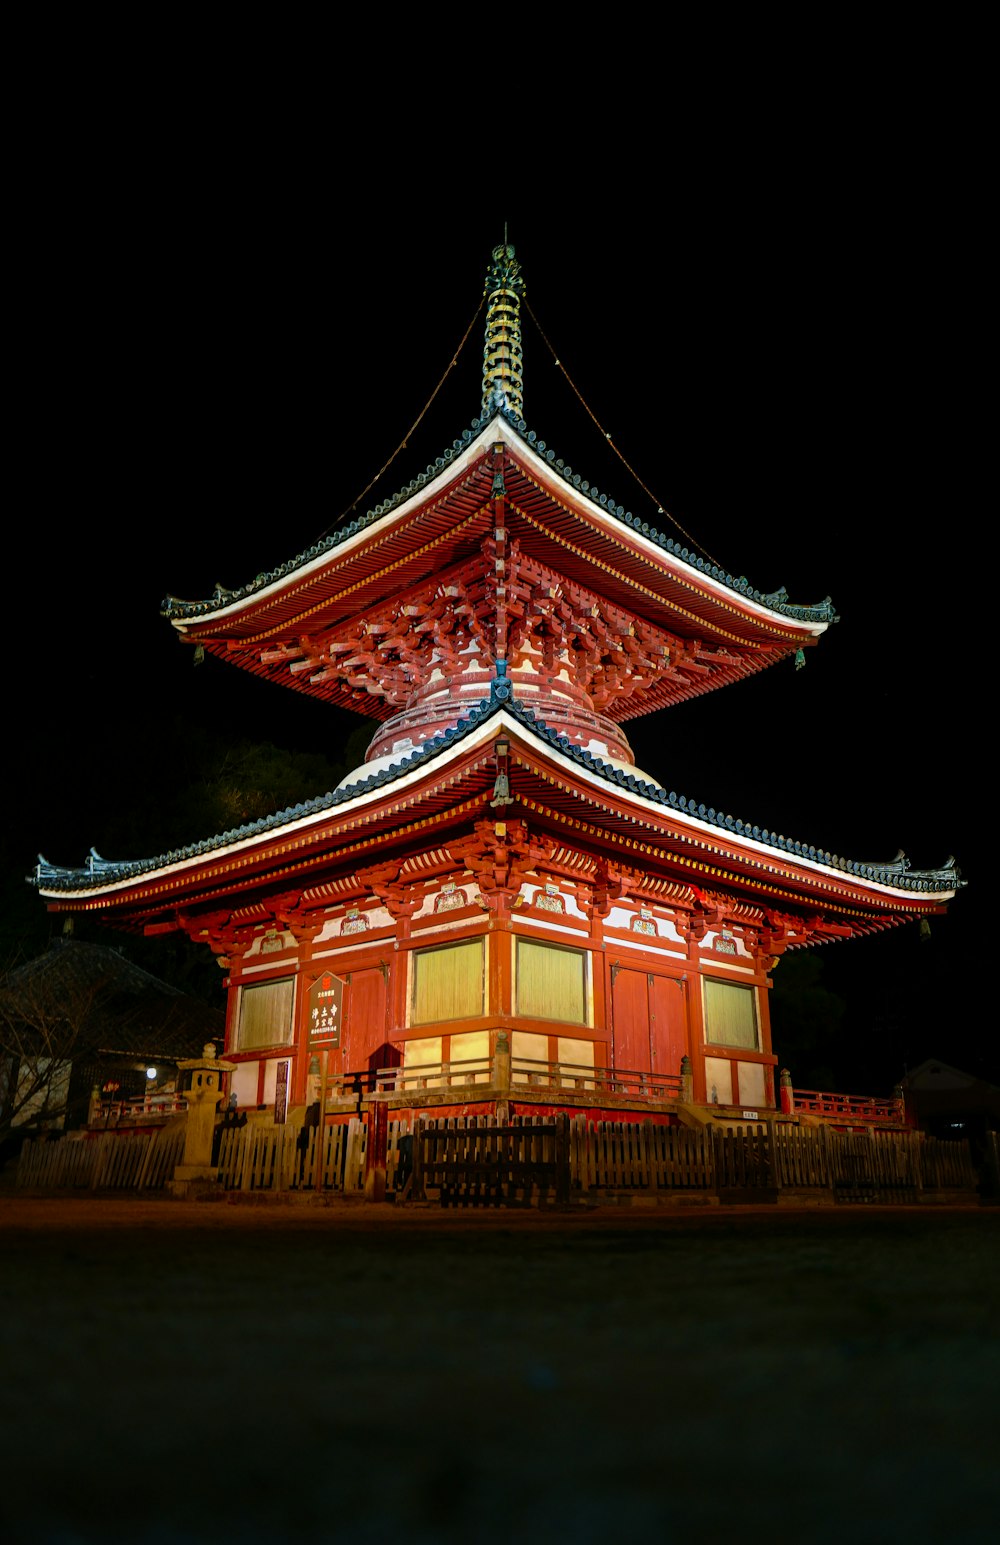 templo marrom e dourado durante a noite